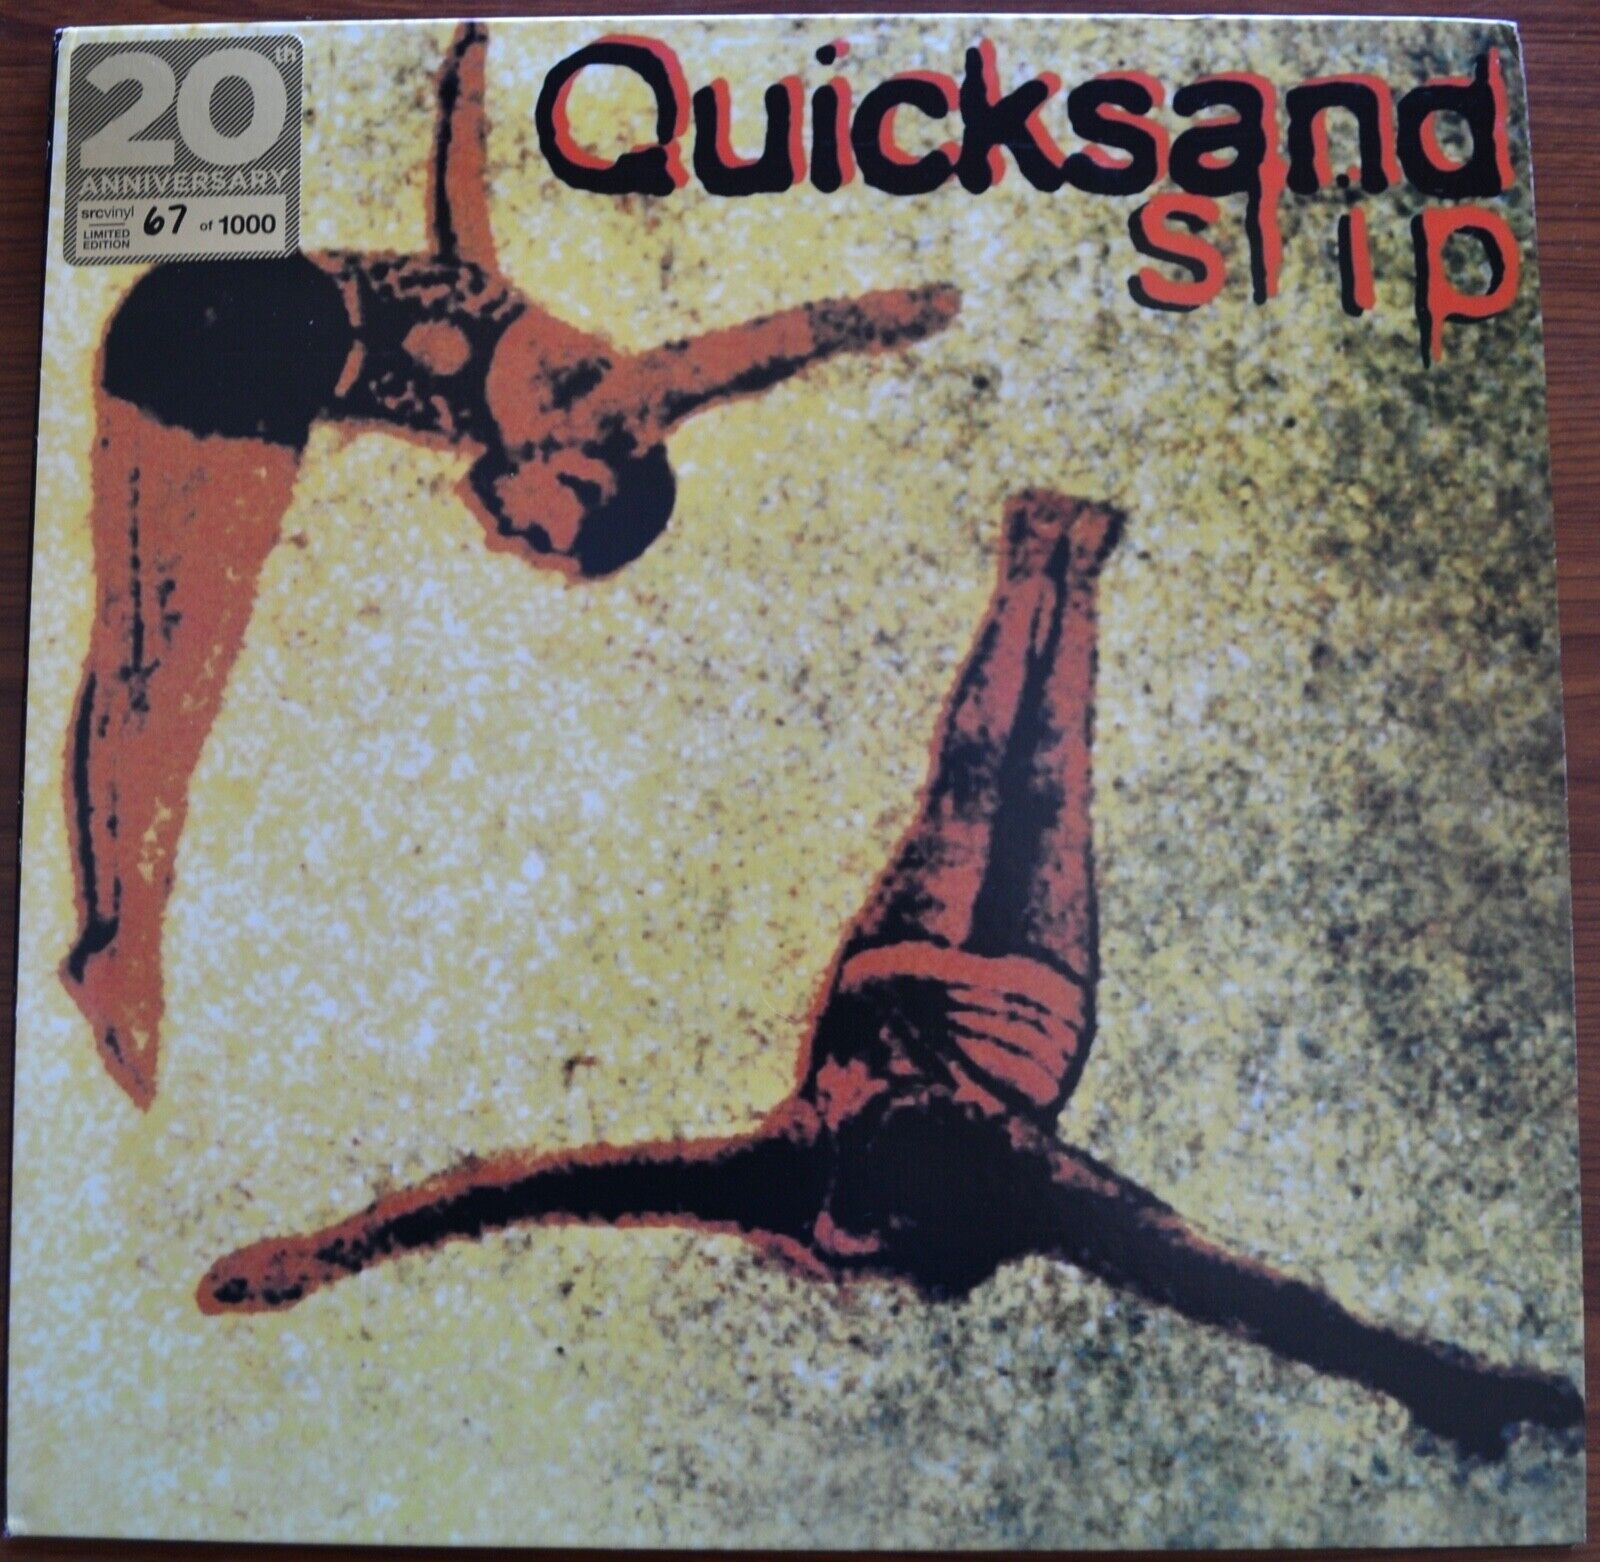 Quicksand- Slip- Polydor/SRC Vinyl (2012 RM, RE)- Ltd Ed- 180 Gram- #67/1000